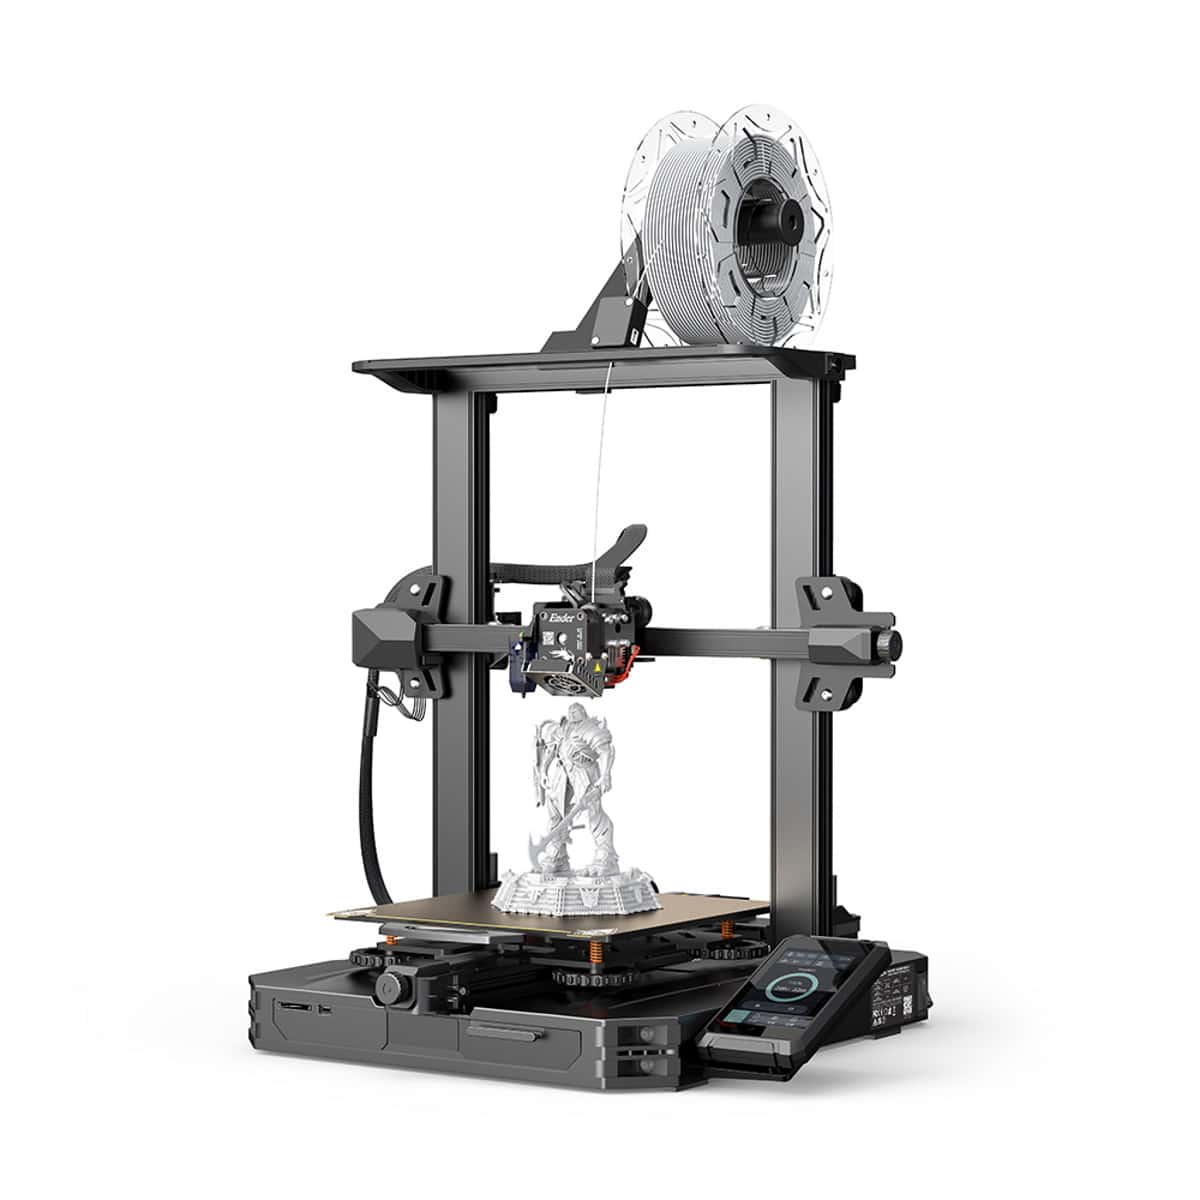 Køb Creality Ender 3 S1 Pro 3d printer - Pris 3695.00 kr.